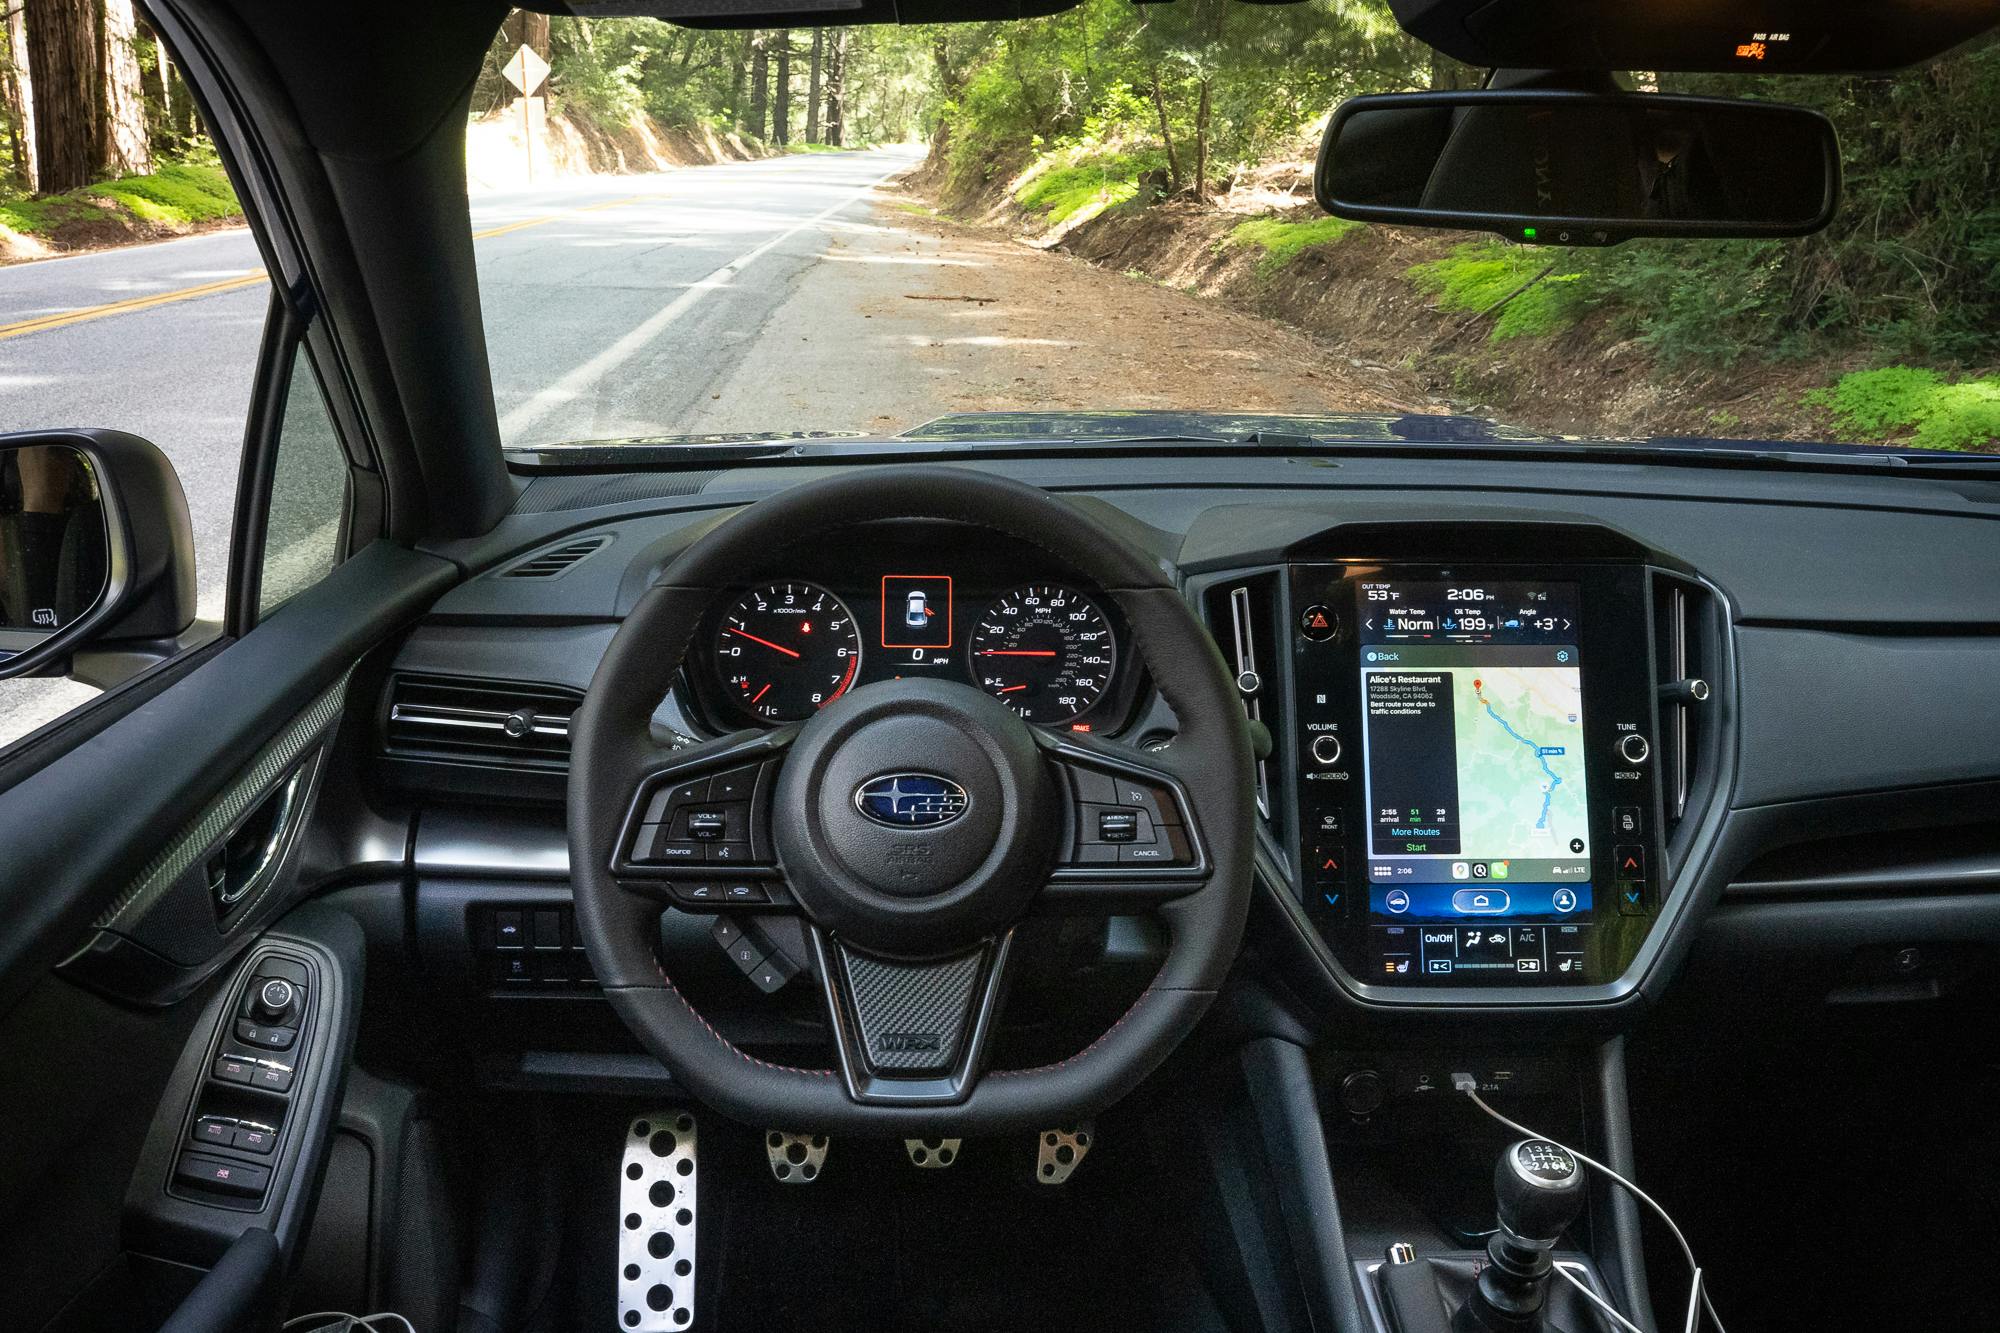 2022 Subaru WRX 6-Speed interior